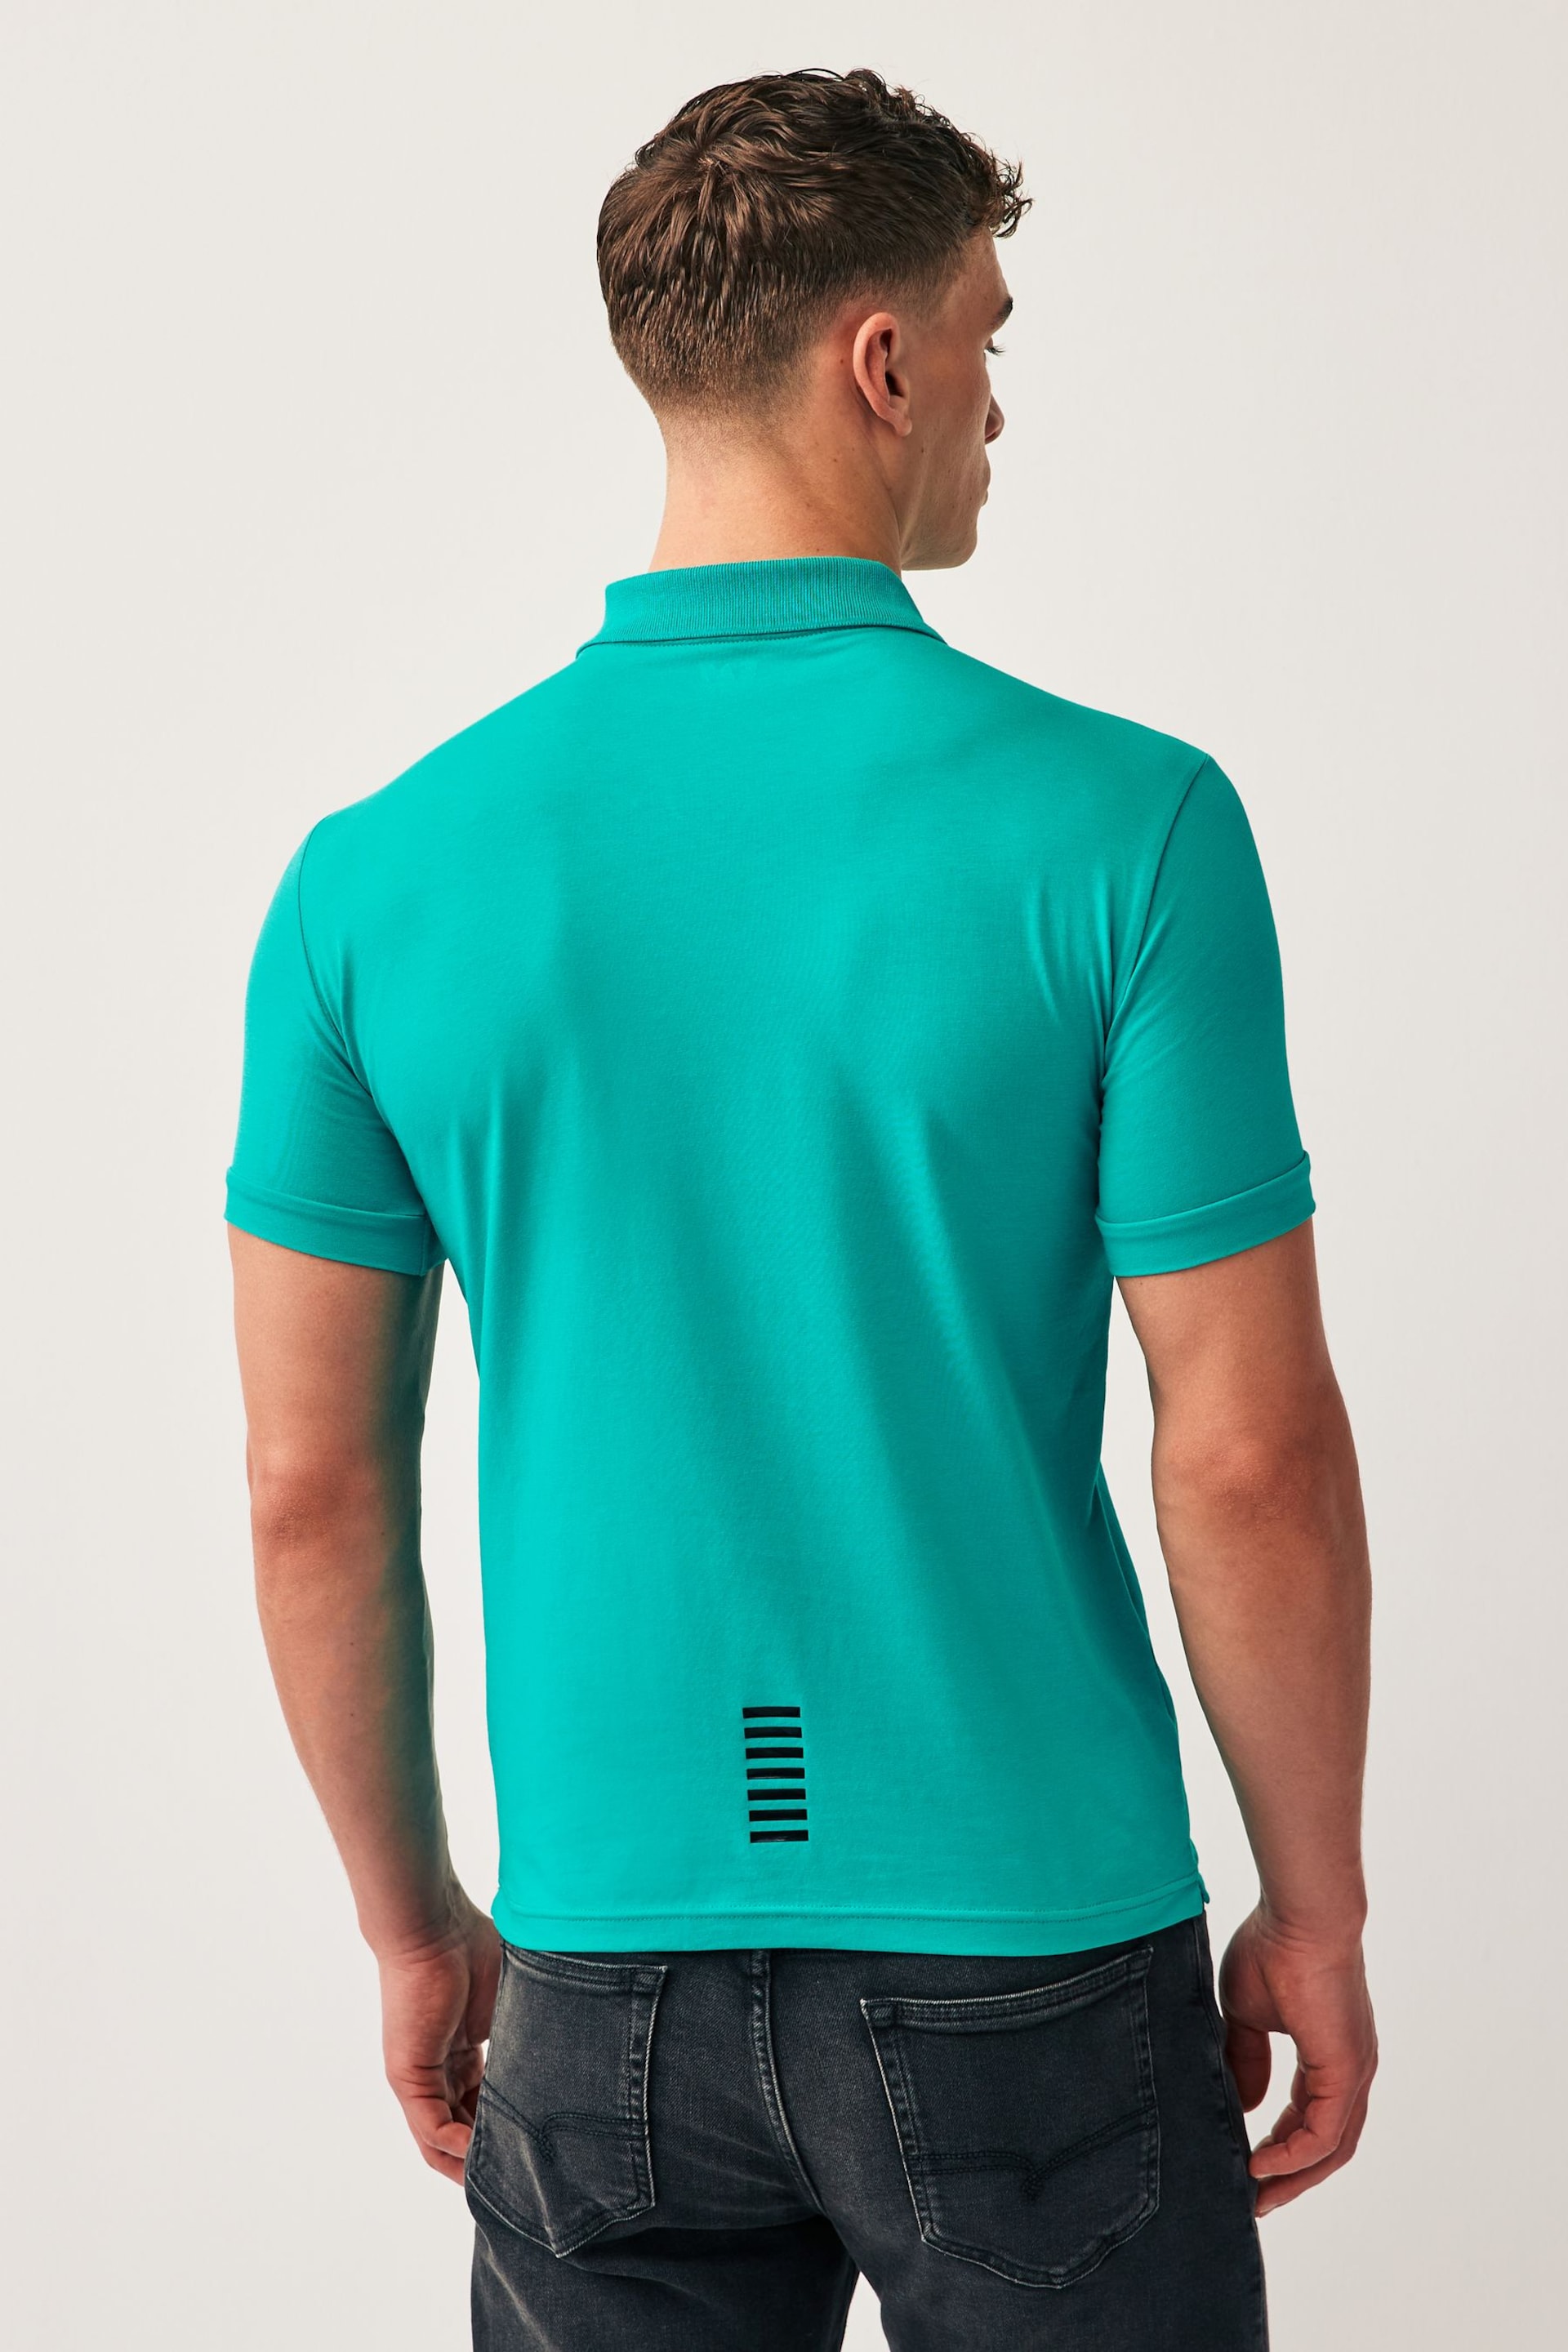 Emporio Armani EA7 Core ID Stretch Cotton Polo Shirt - Image 2 of 4